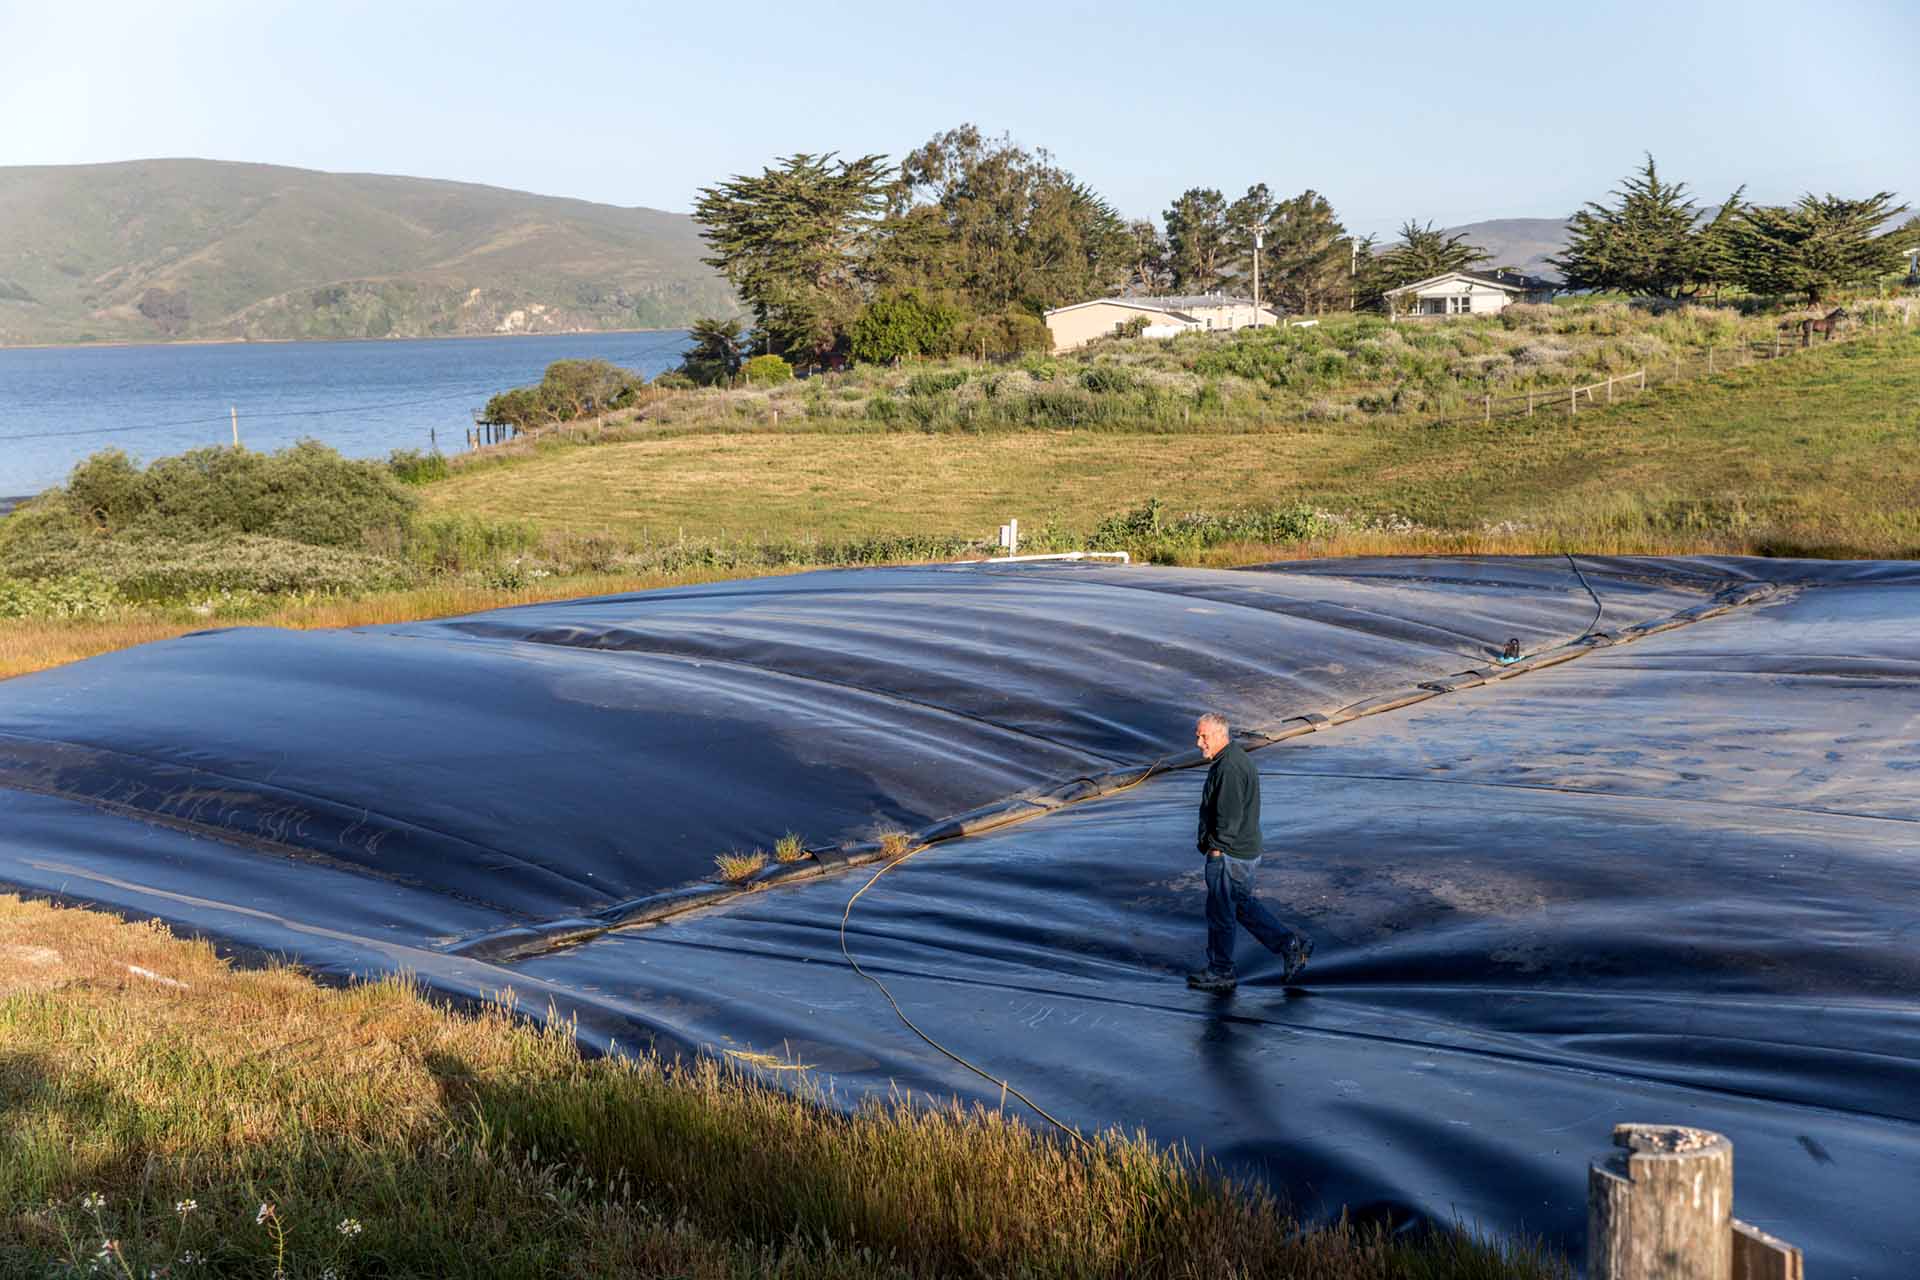 albert straus walking across tarp for methane digester